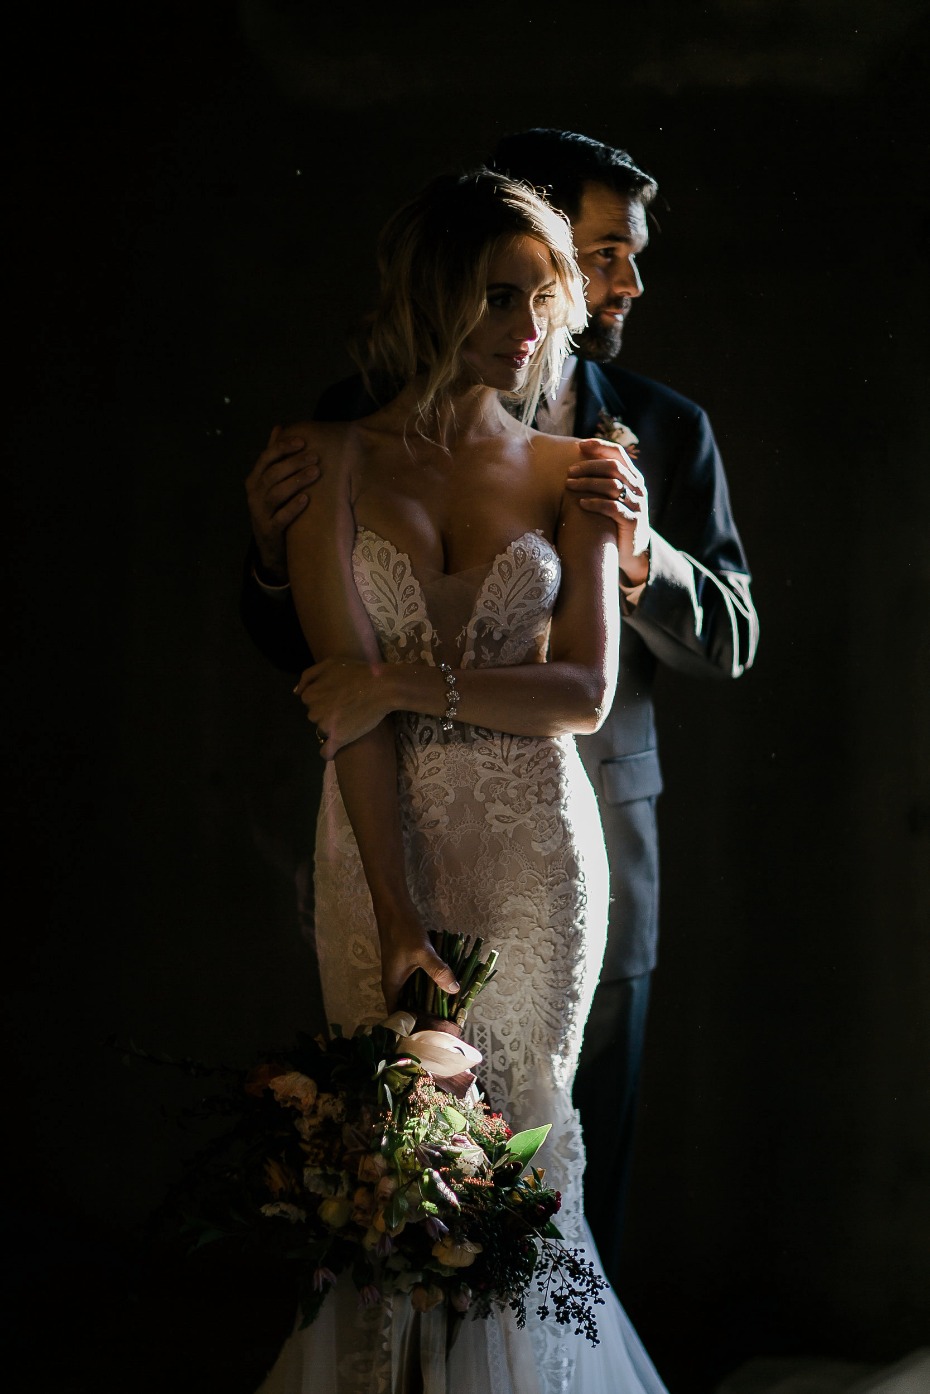 dramatic lighting for your wedding portraites